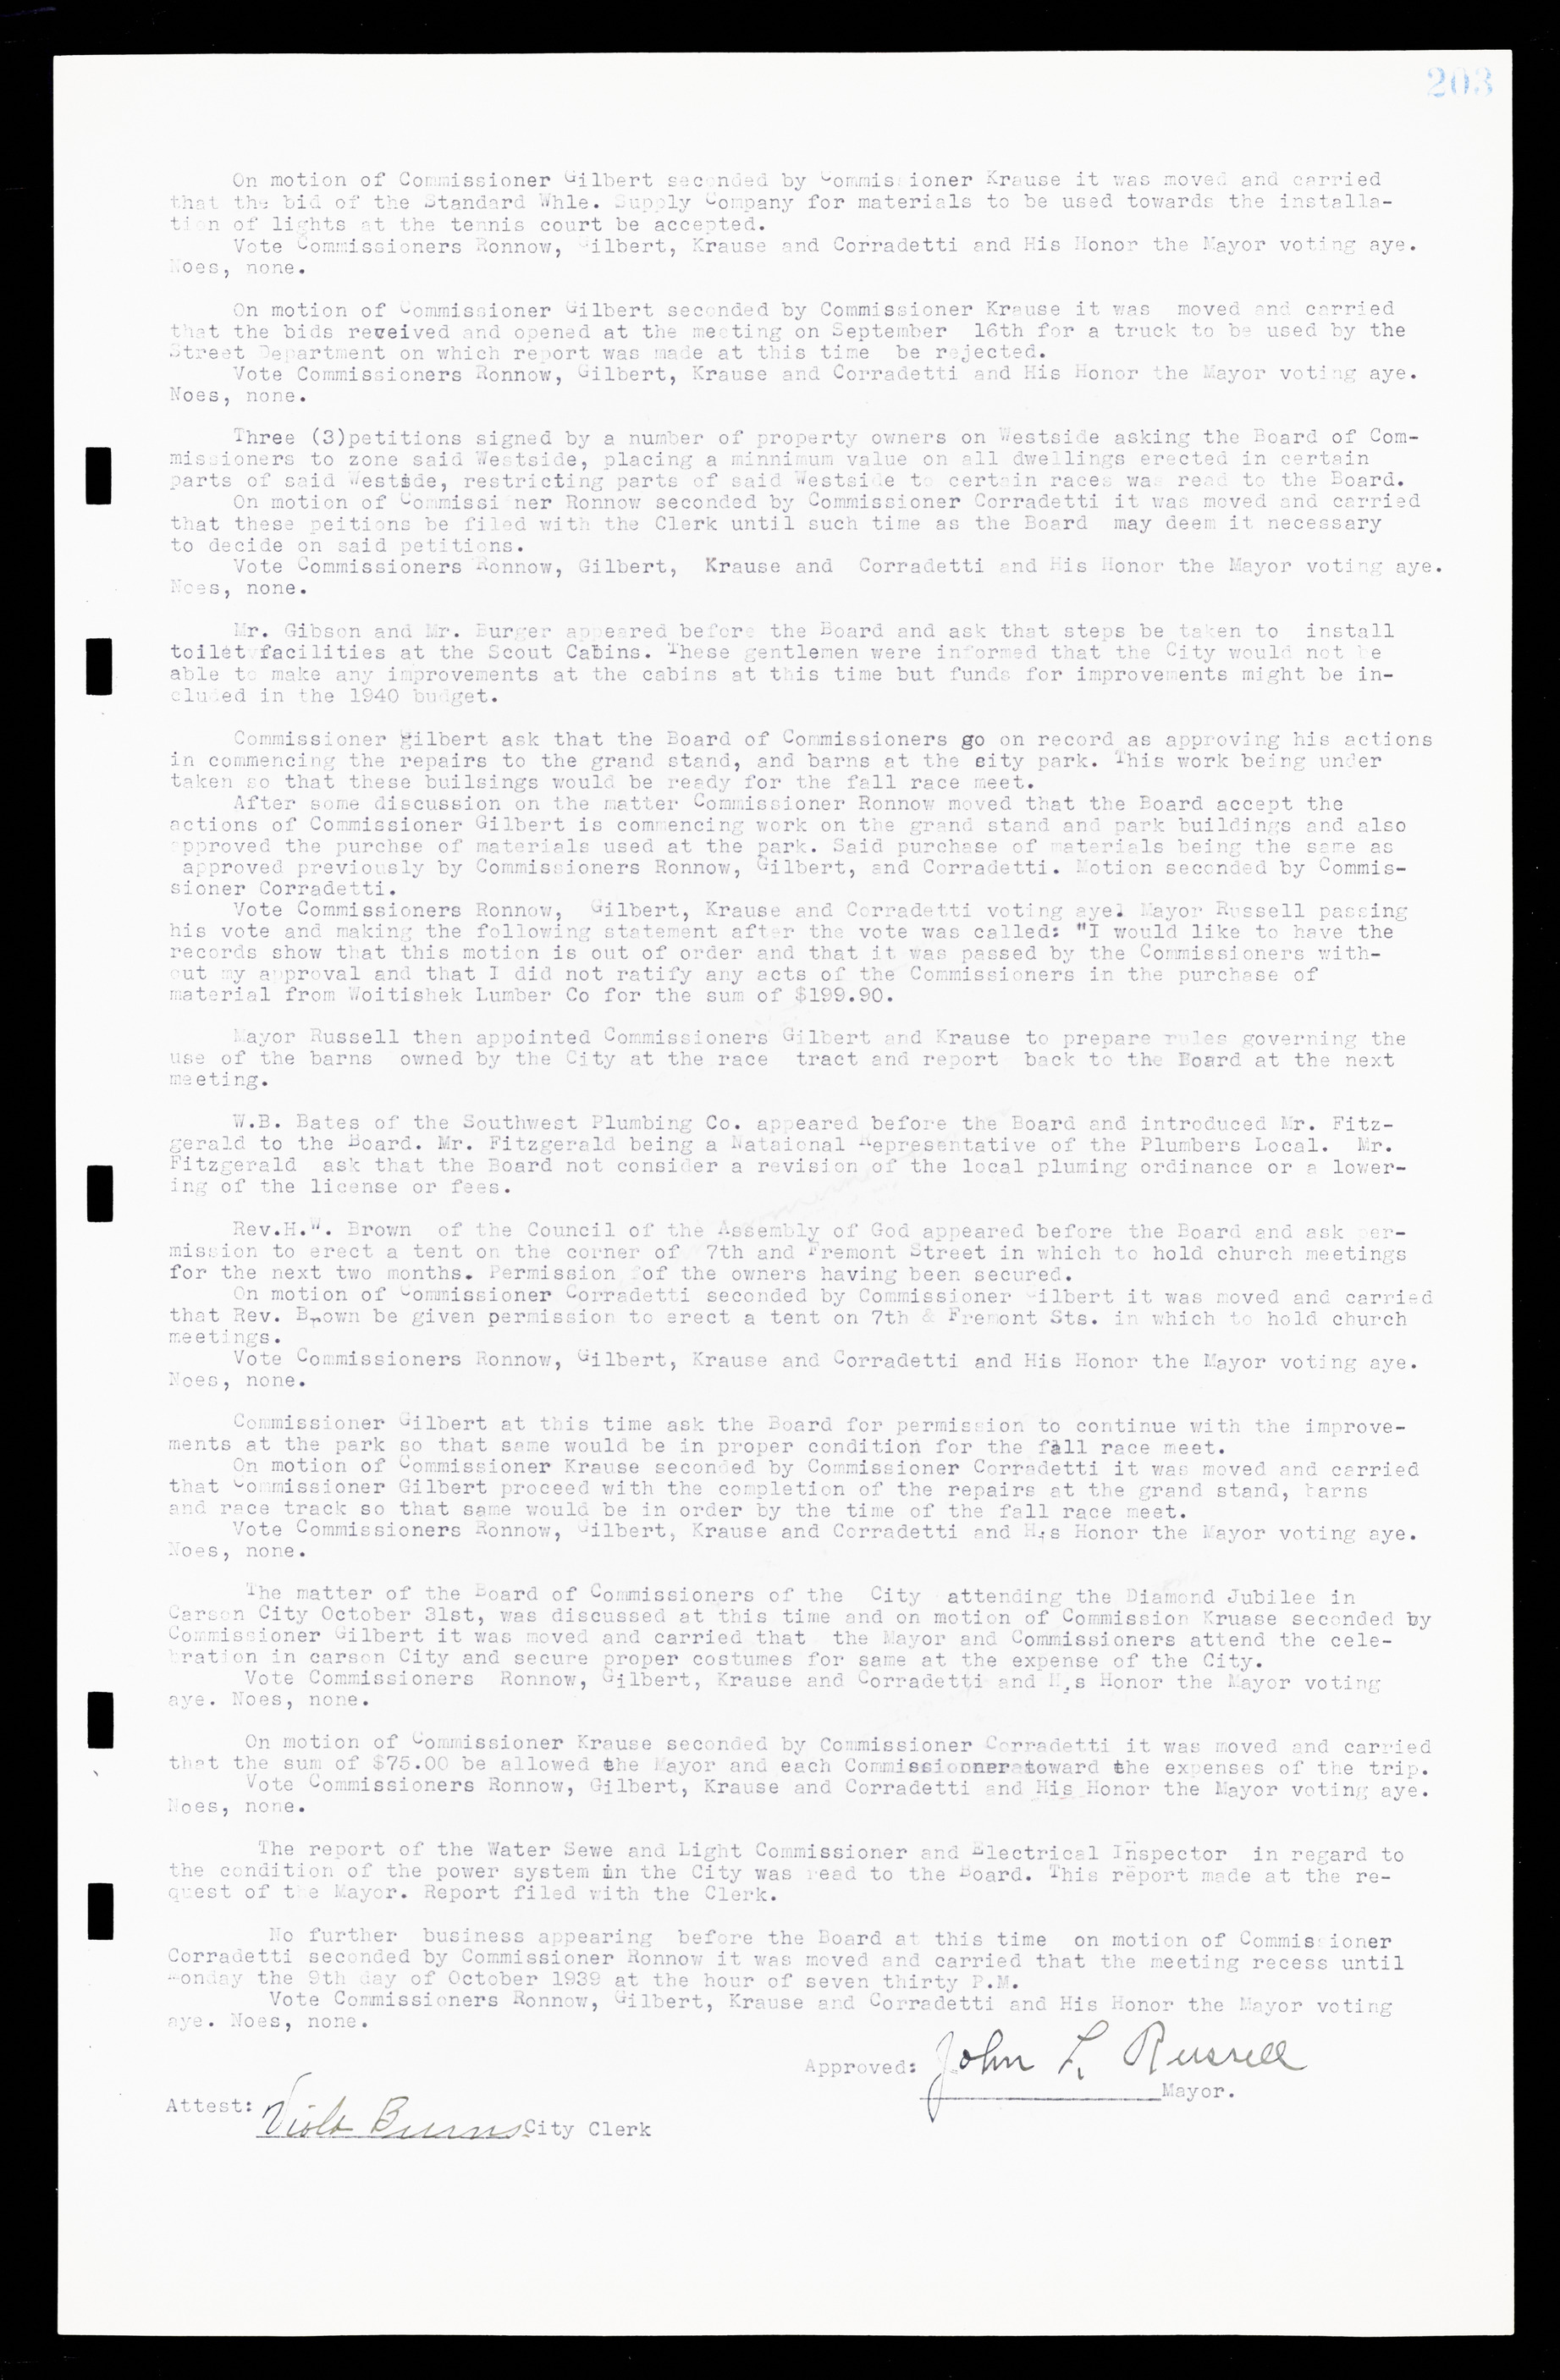 Las Vegas City Commission Minutes, February 17, 1937 to August 4, 1942, lvc000004-221